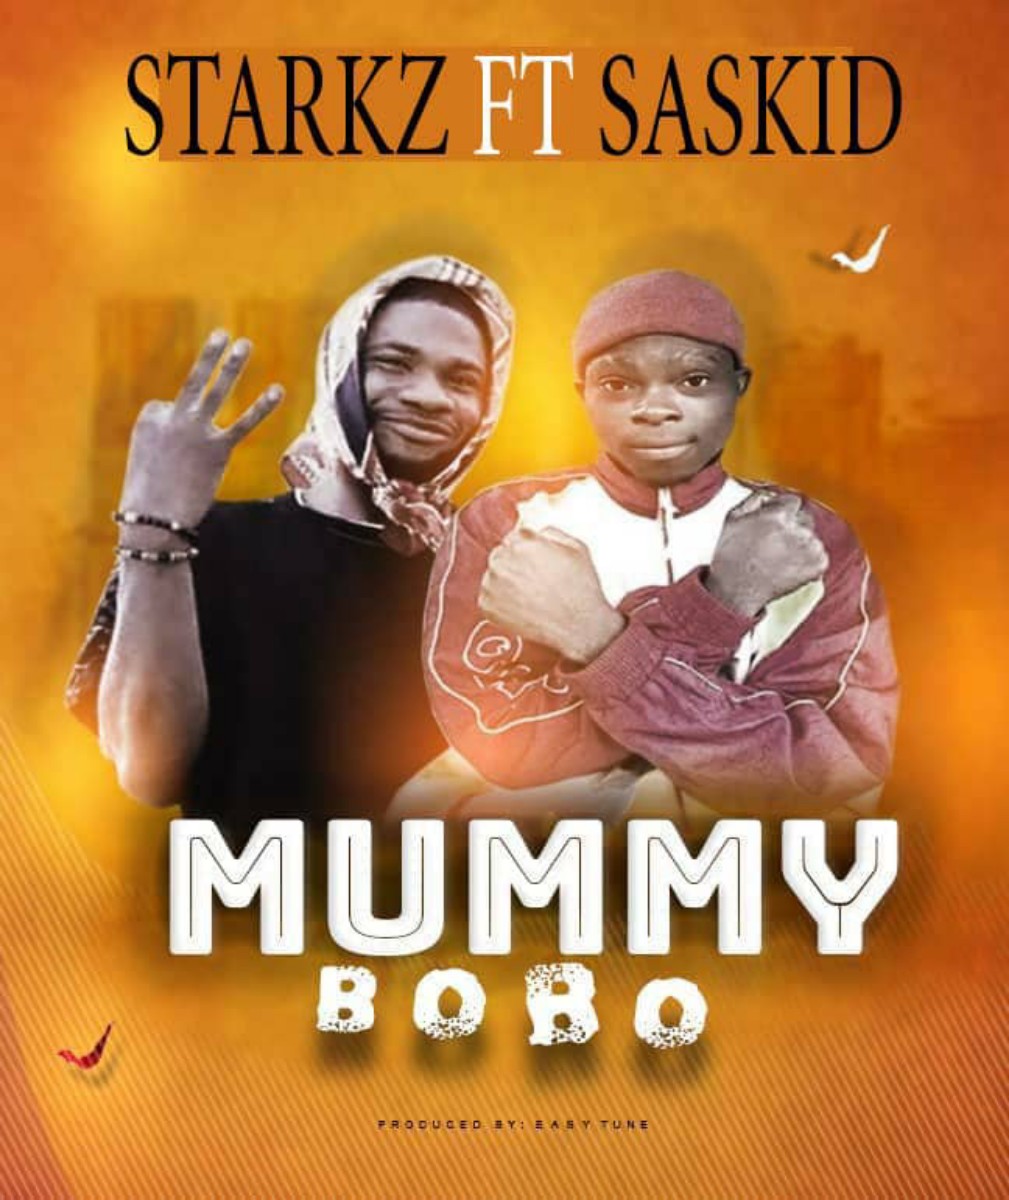 Starkz Ft Saskid - Mommy BoBo Mp3 Download, Starkz Ft Saskid - Mommy BoBo Mp3 Download nupeflaver, Mommy BoBo song by starkz Ft Saskid